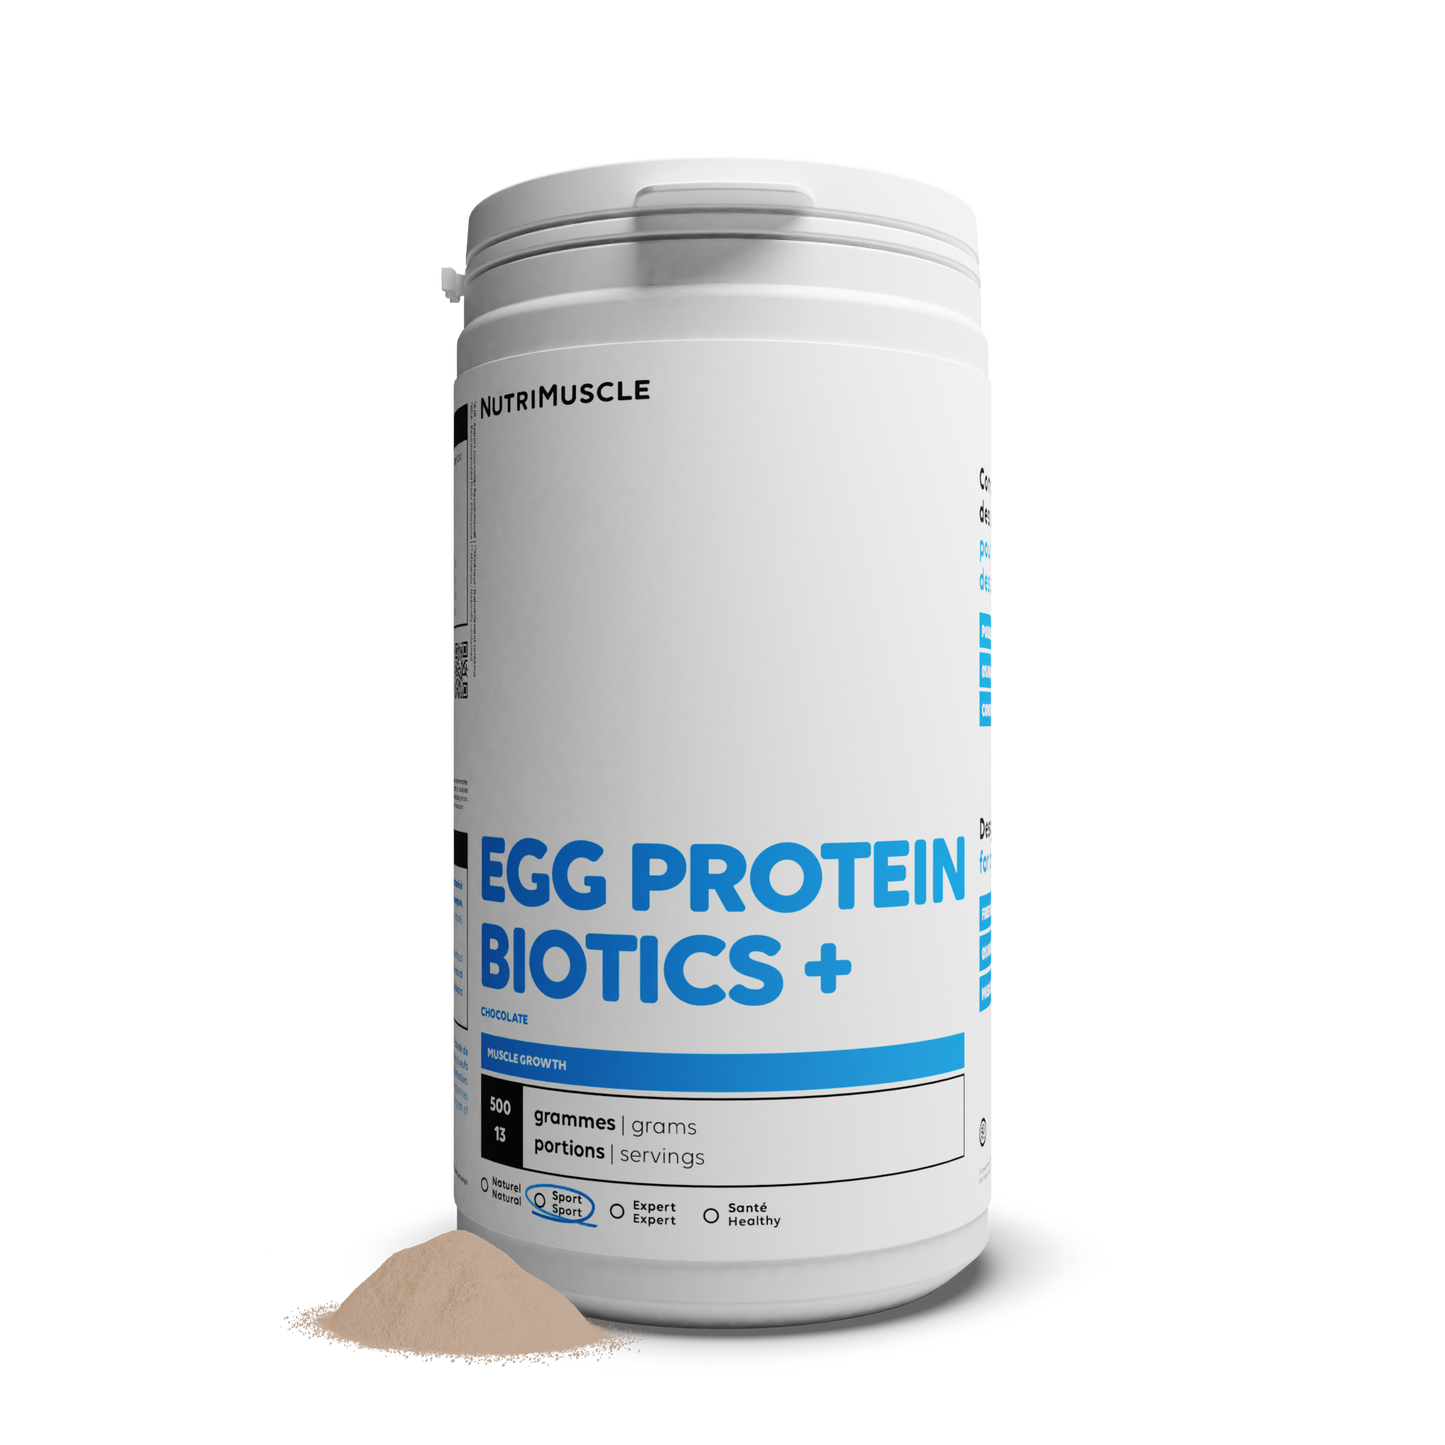 Powder egg protein